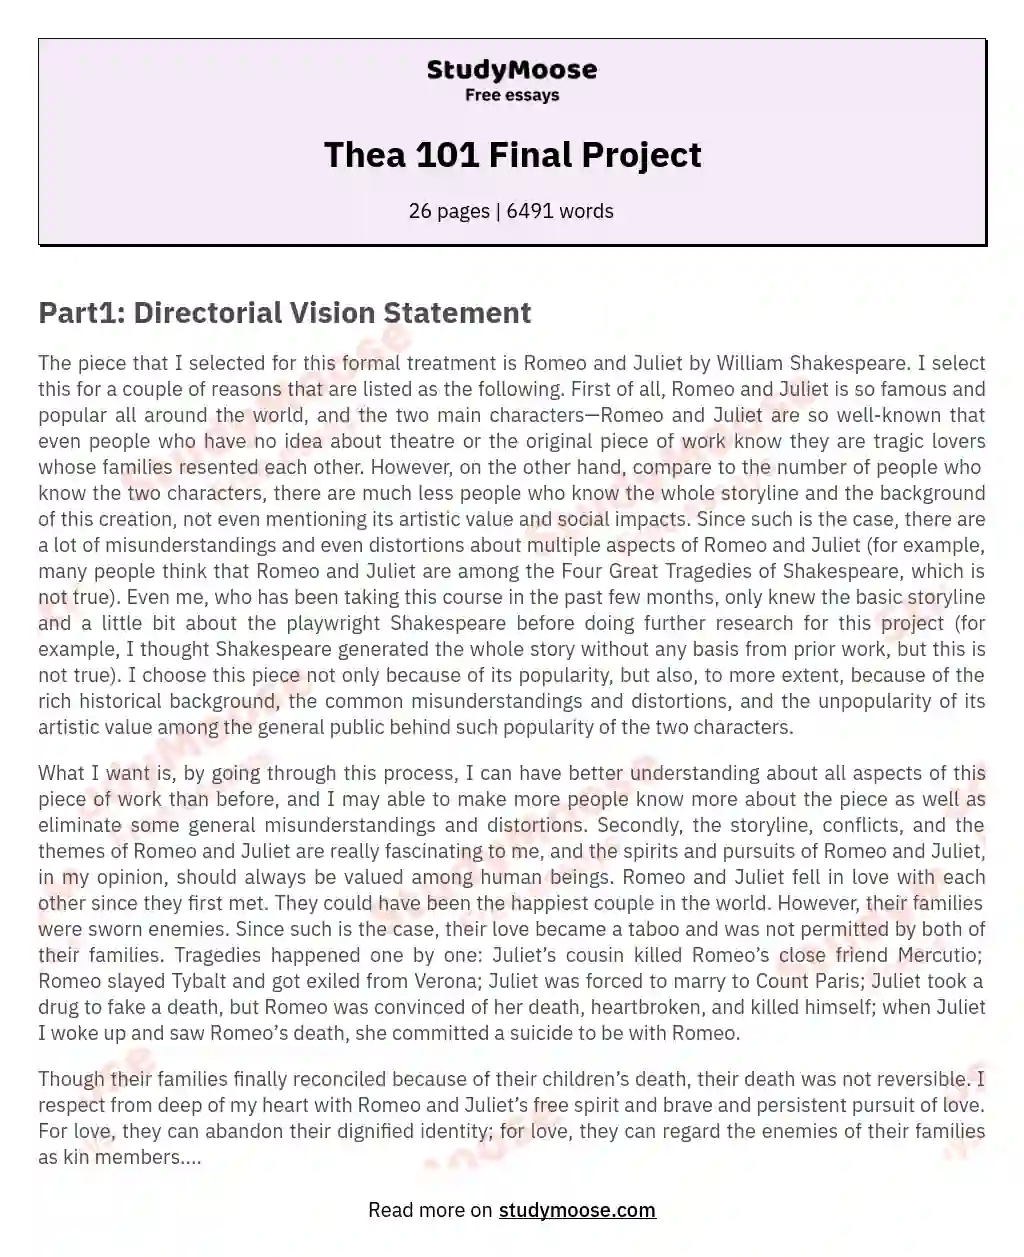 Thea 101 Final Project essay